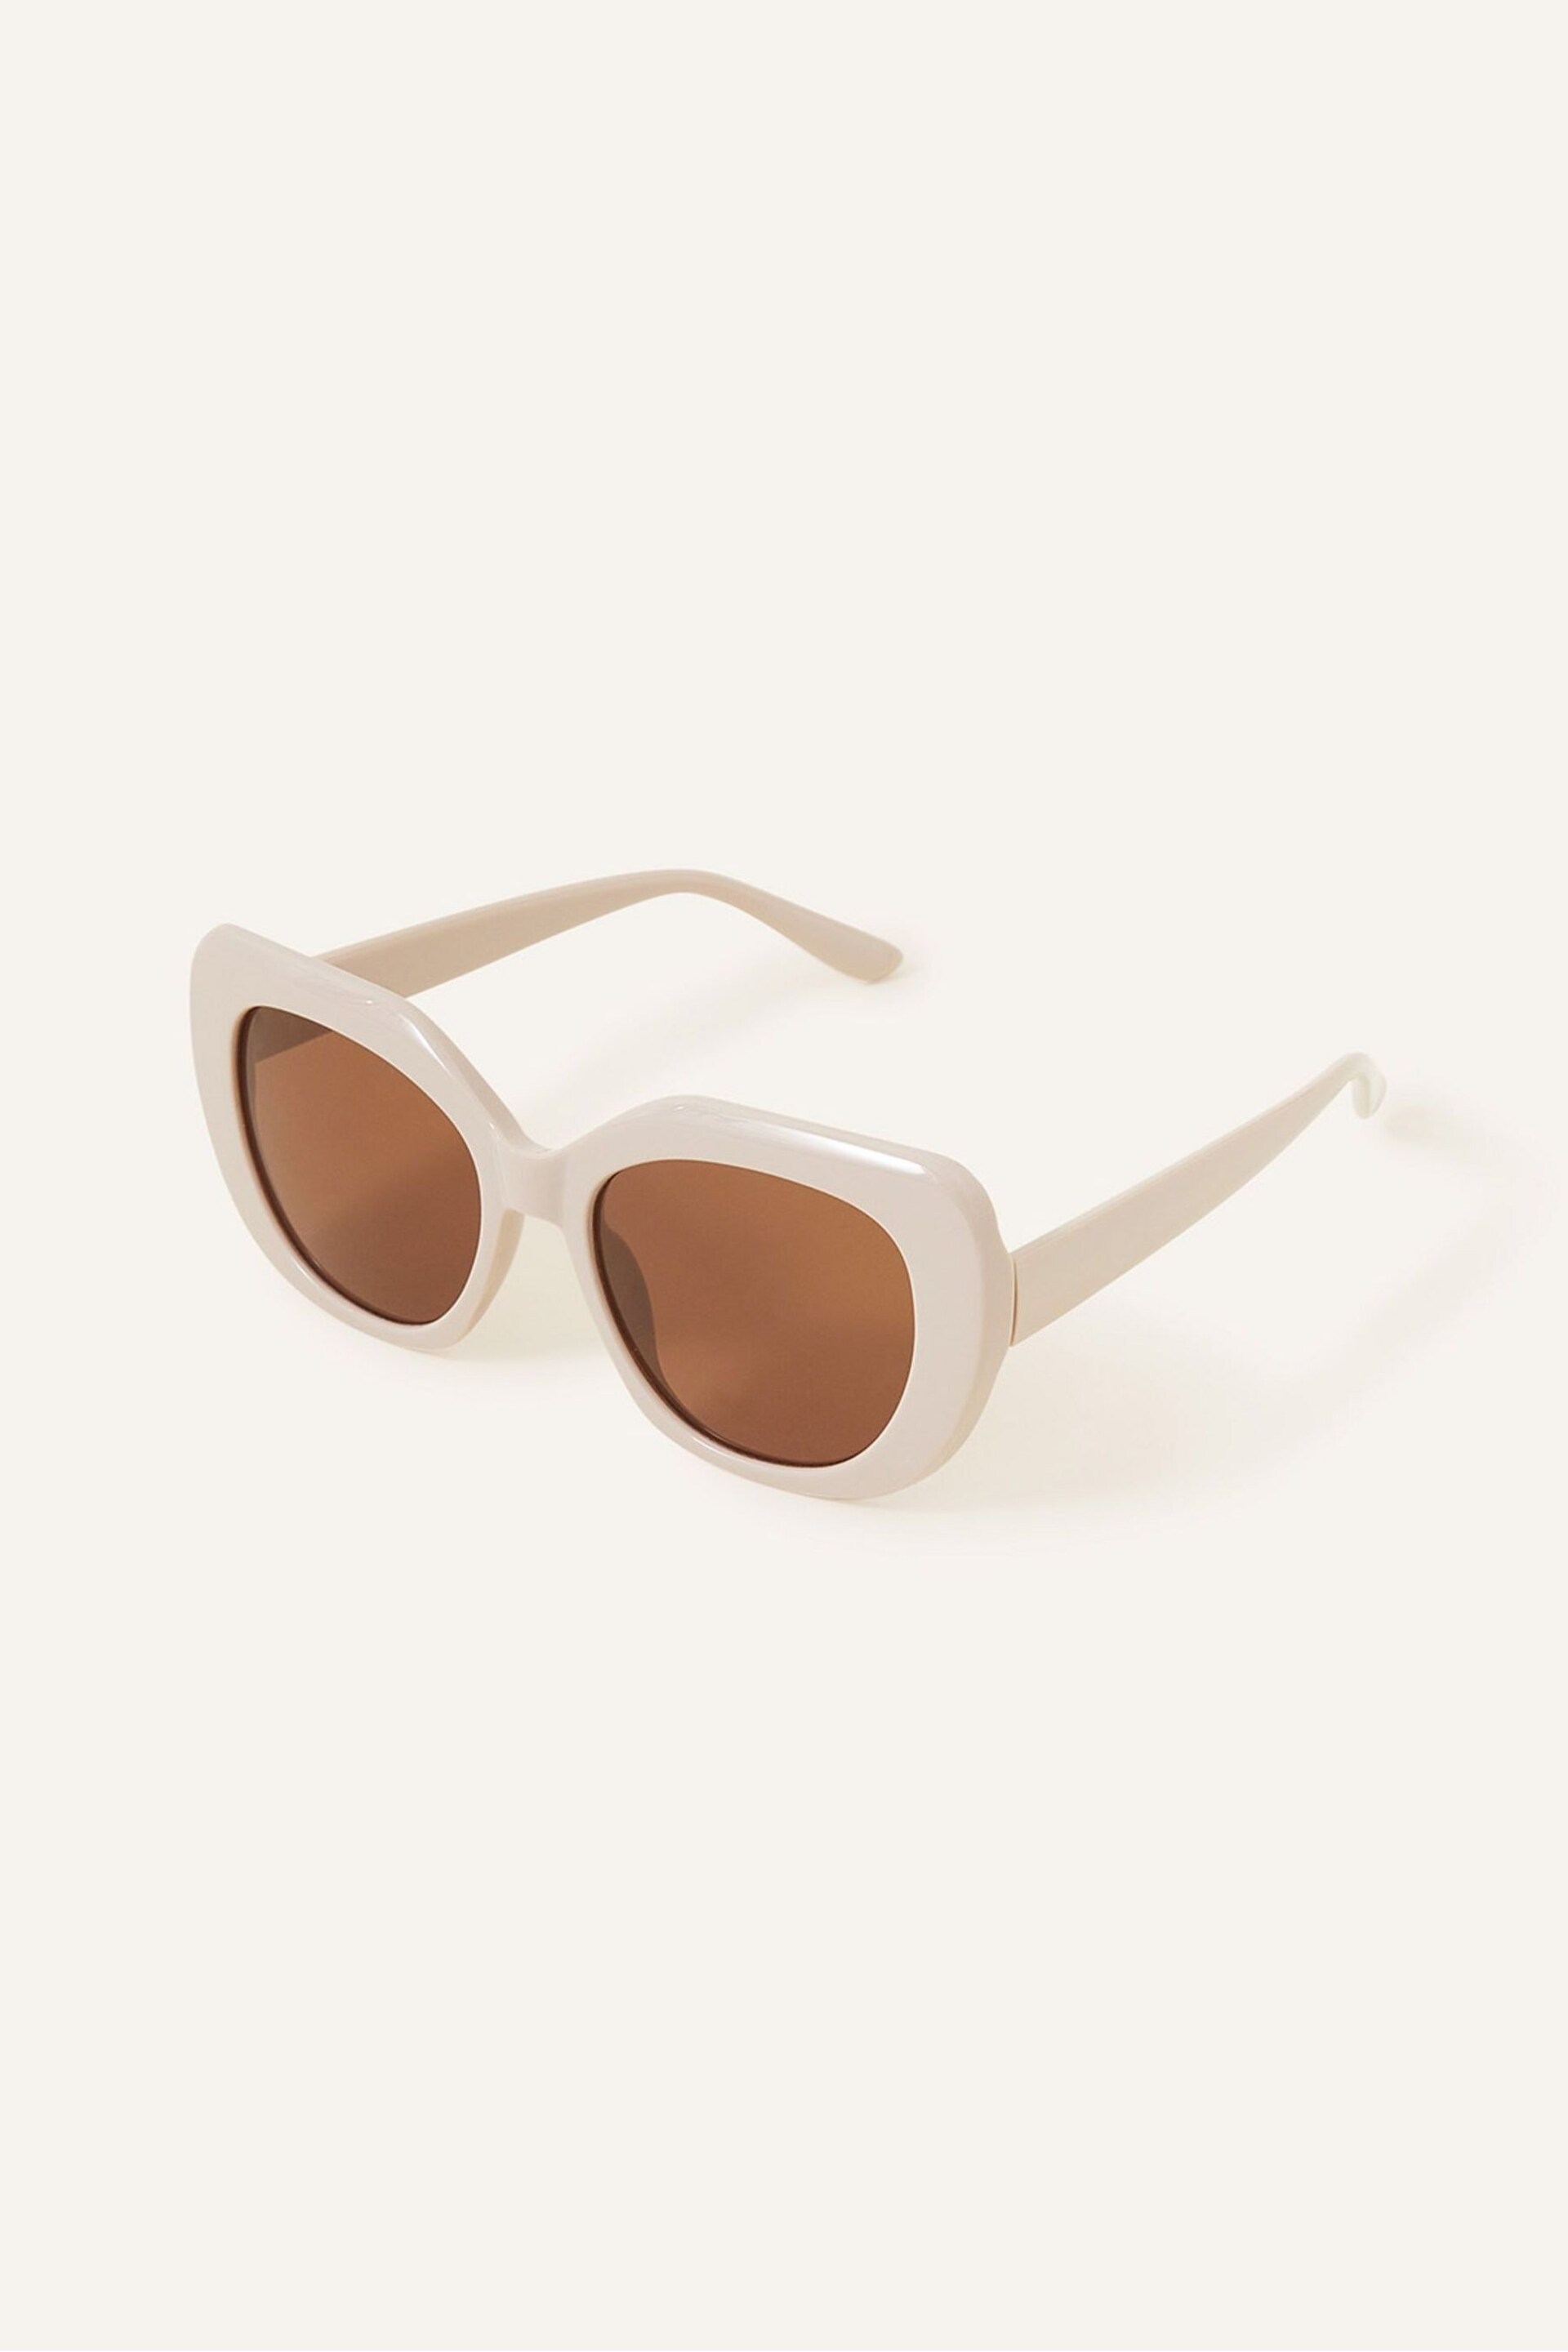 Accessorize Cream Oversized Soft Cateye Sunglasses - Image 1 of 3